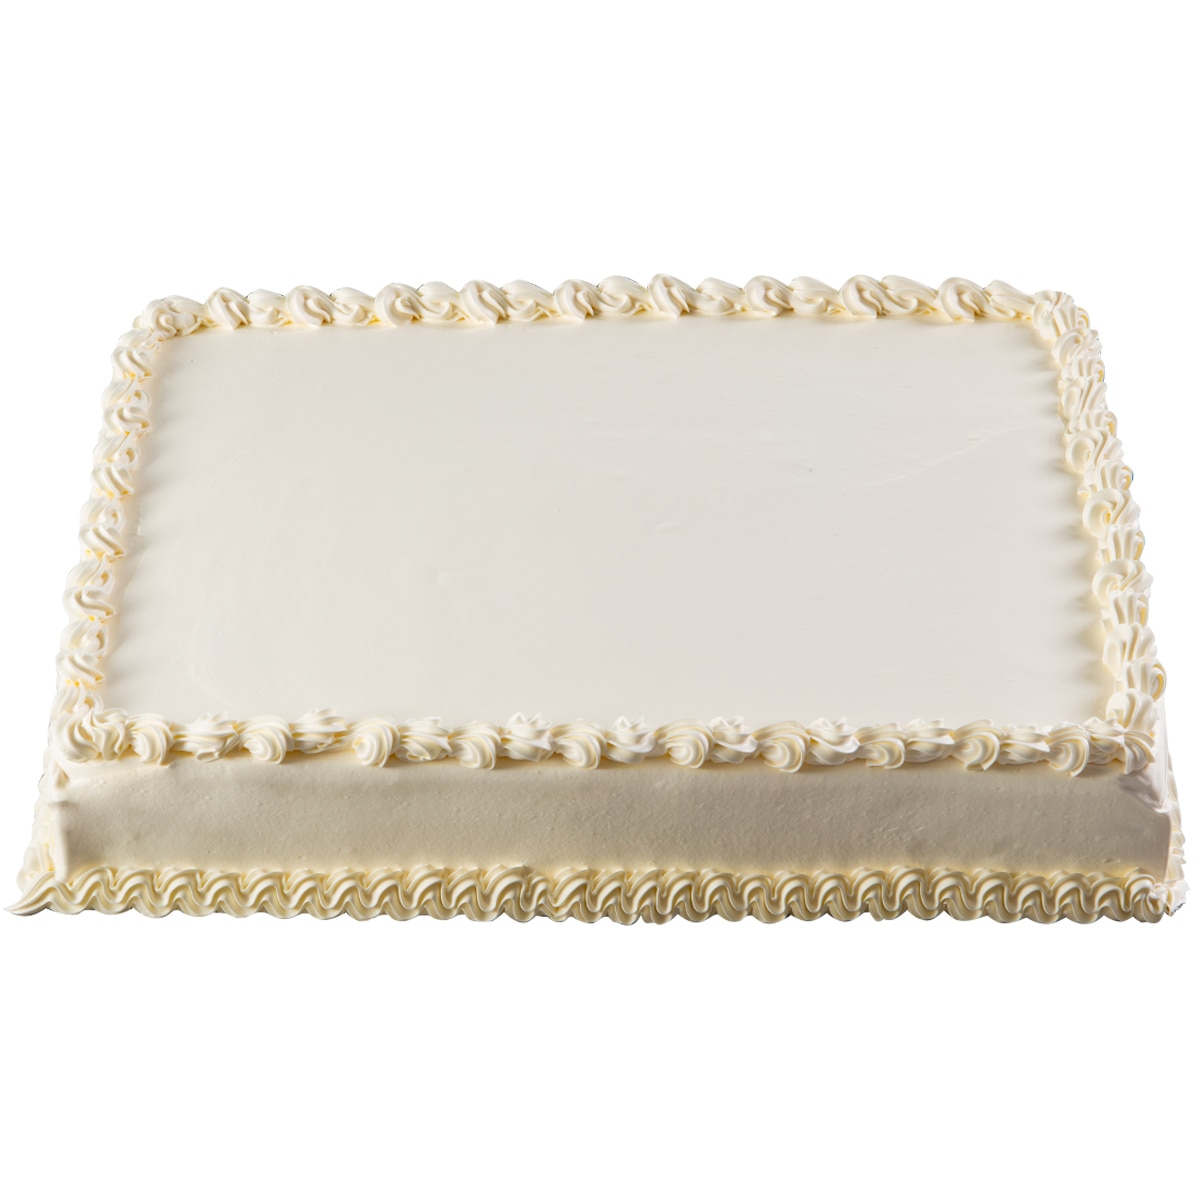 Happy Birthday - Diamond Cake